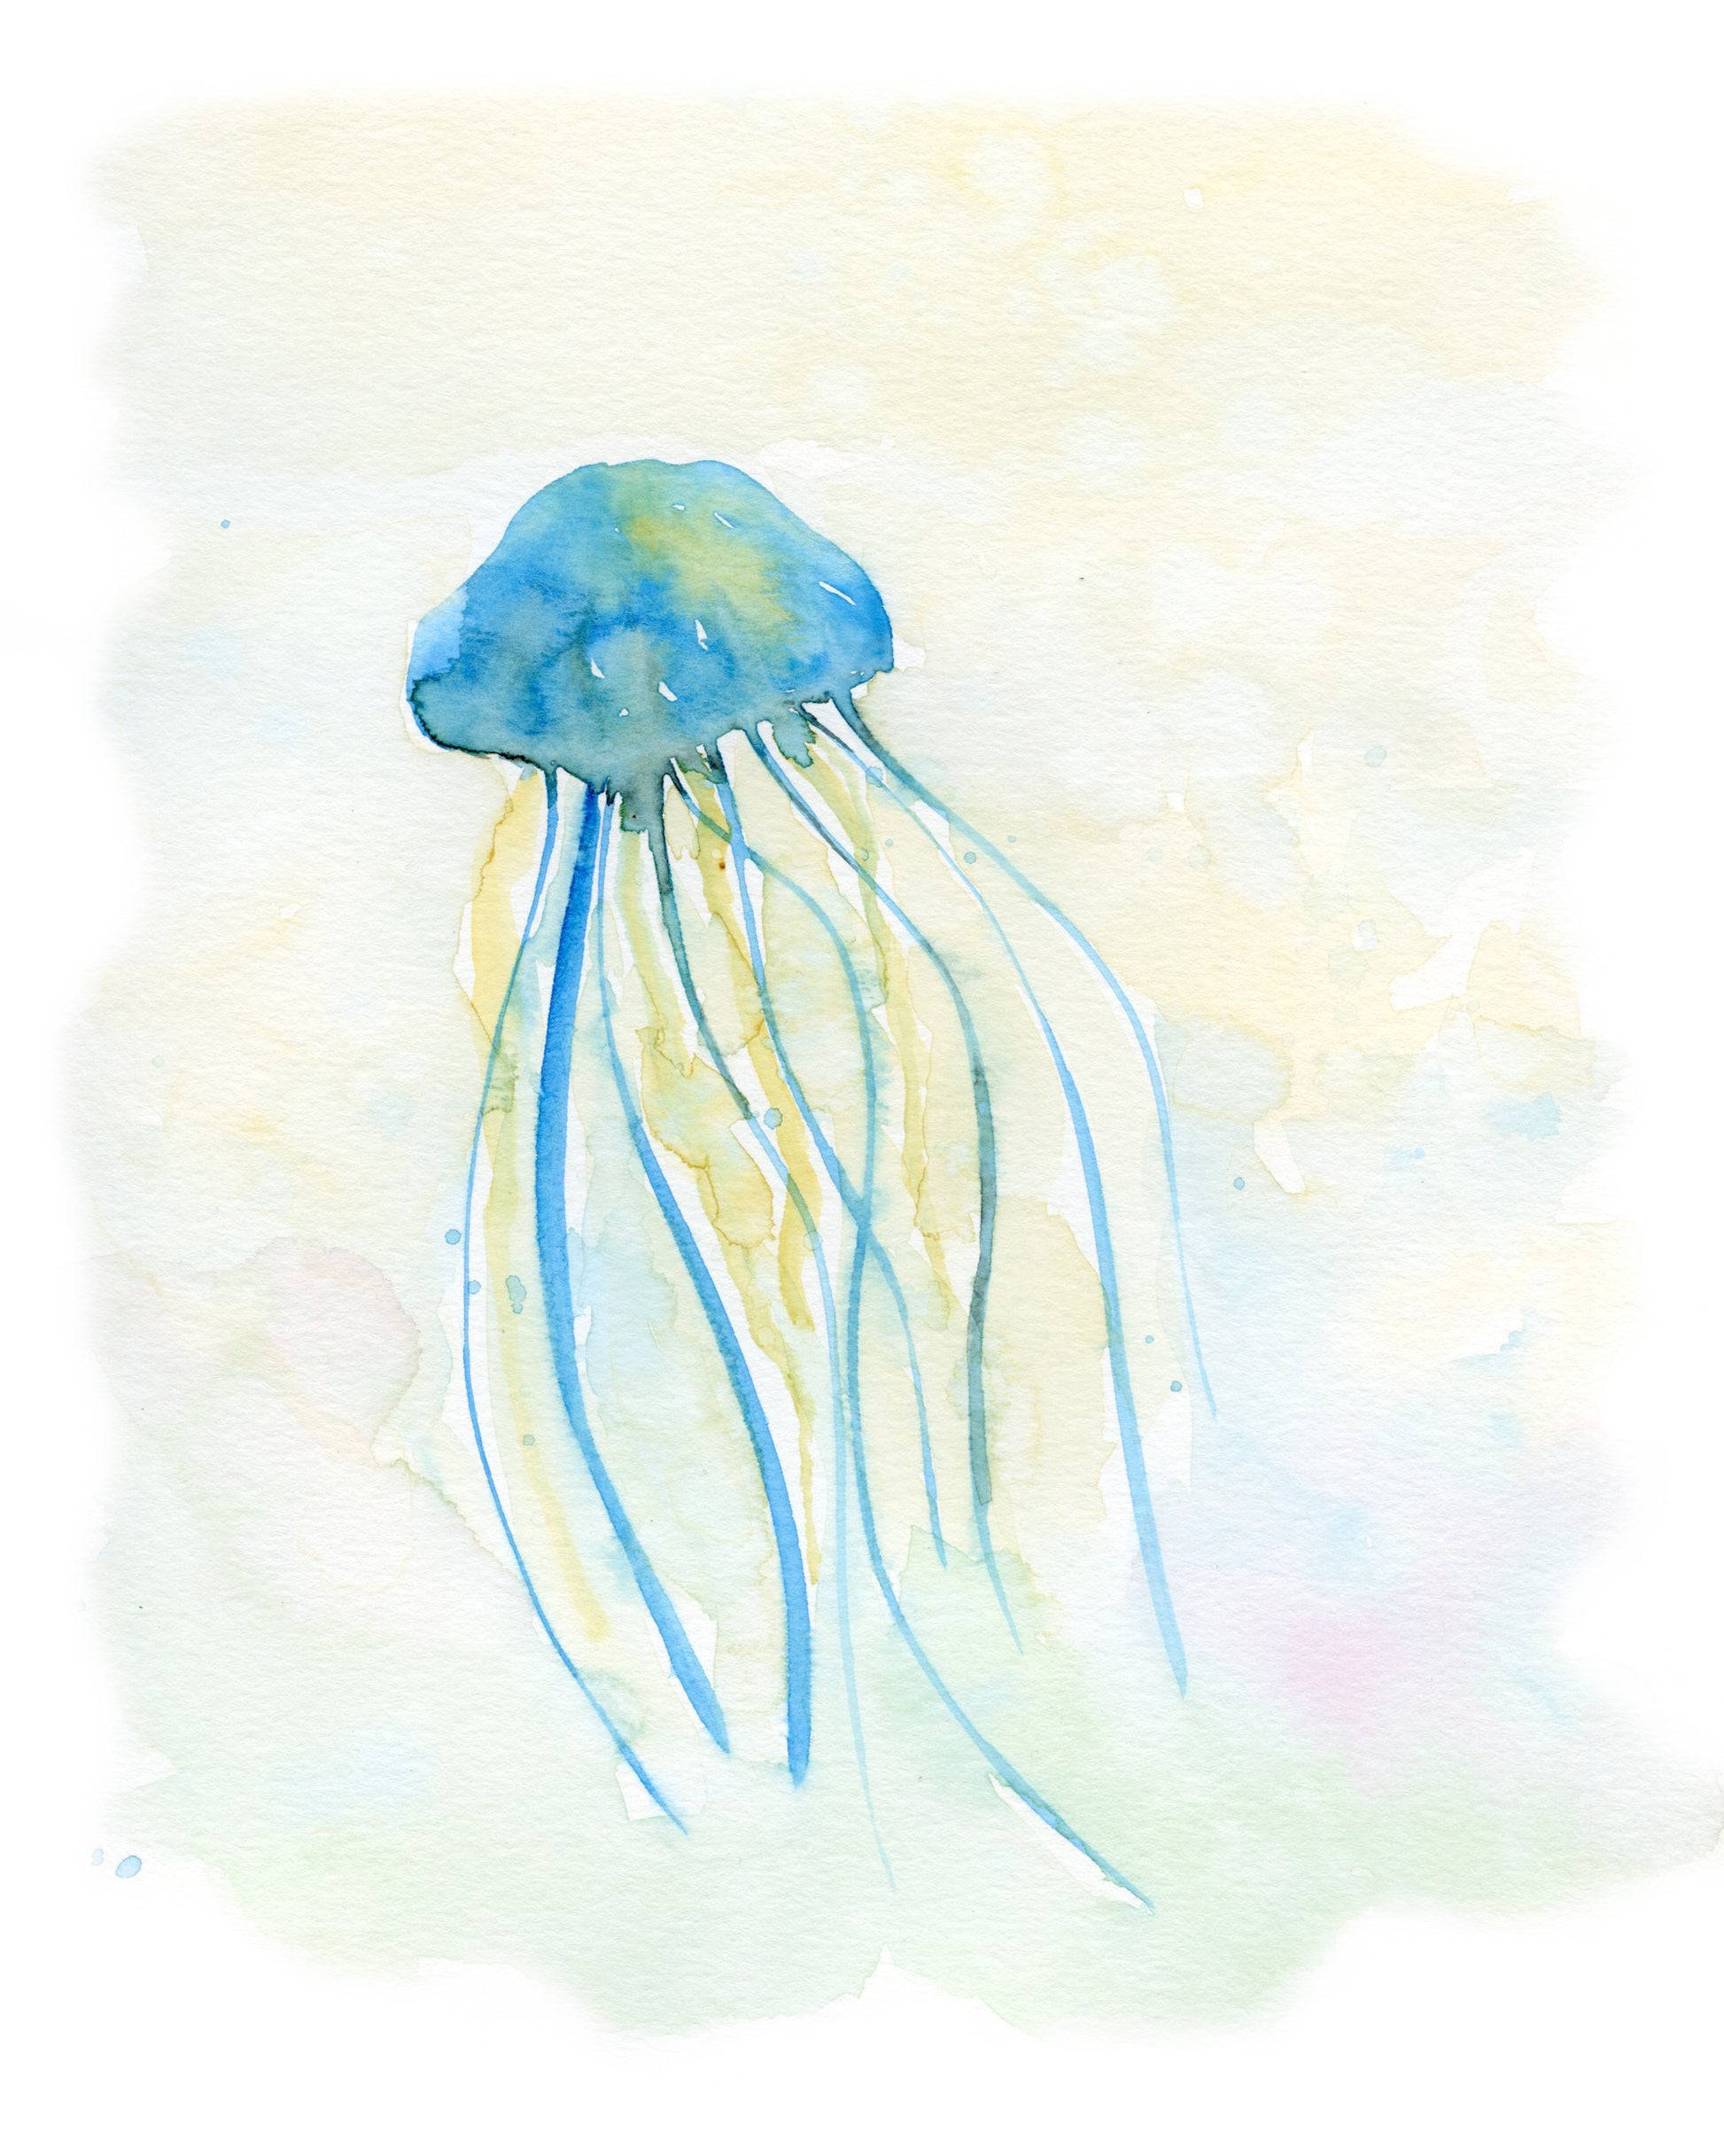 Jellyfish Watercolor Print Art - Flamingo Shores - Original Art for Home Decor and Gifts